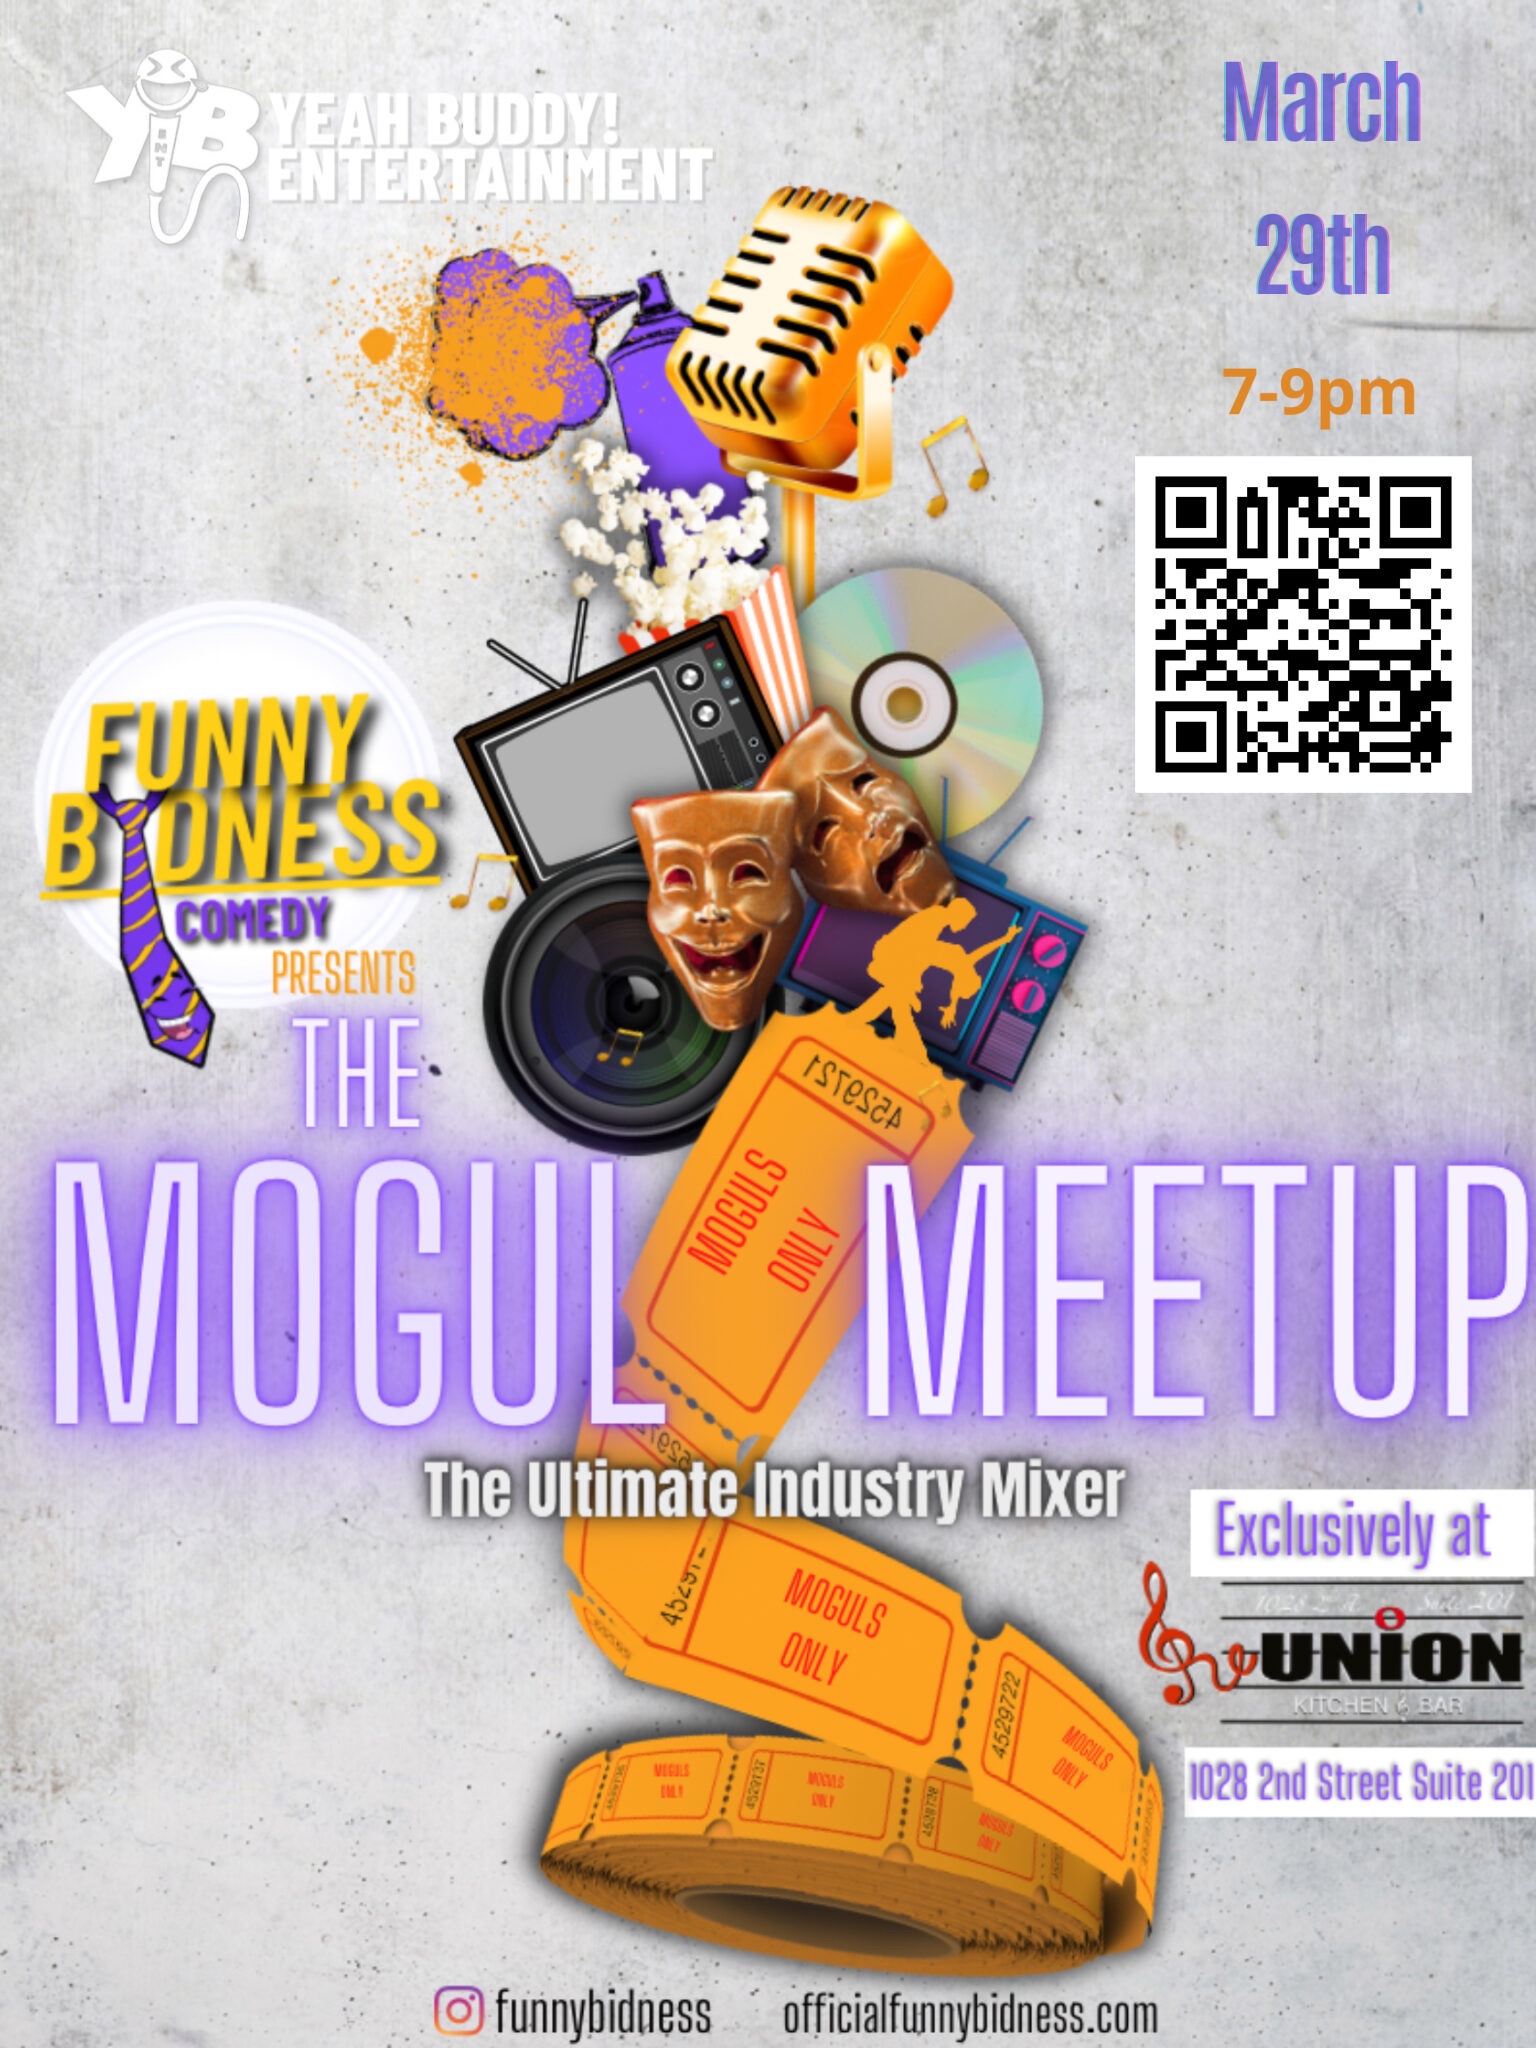 The Mogul Meet Up – Mar 29th